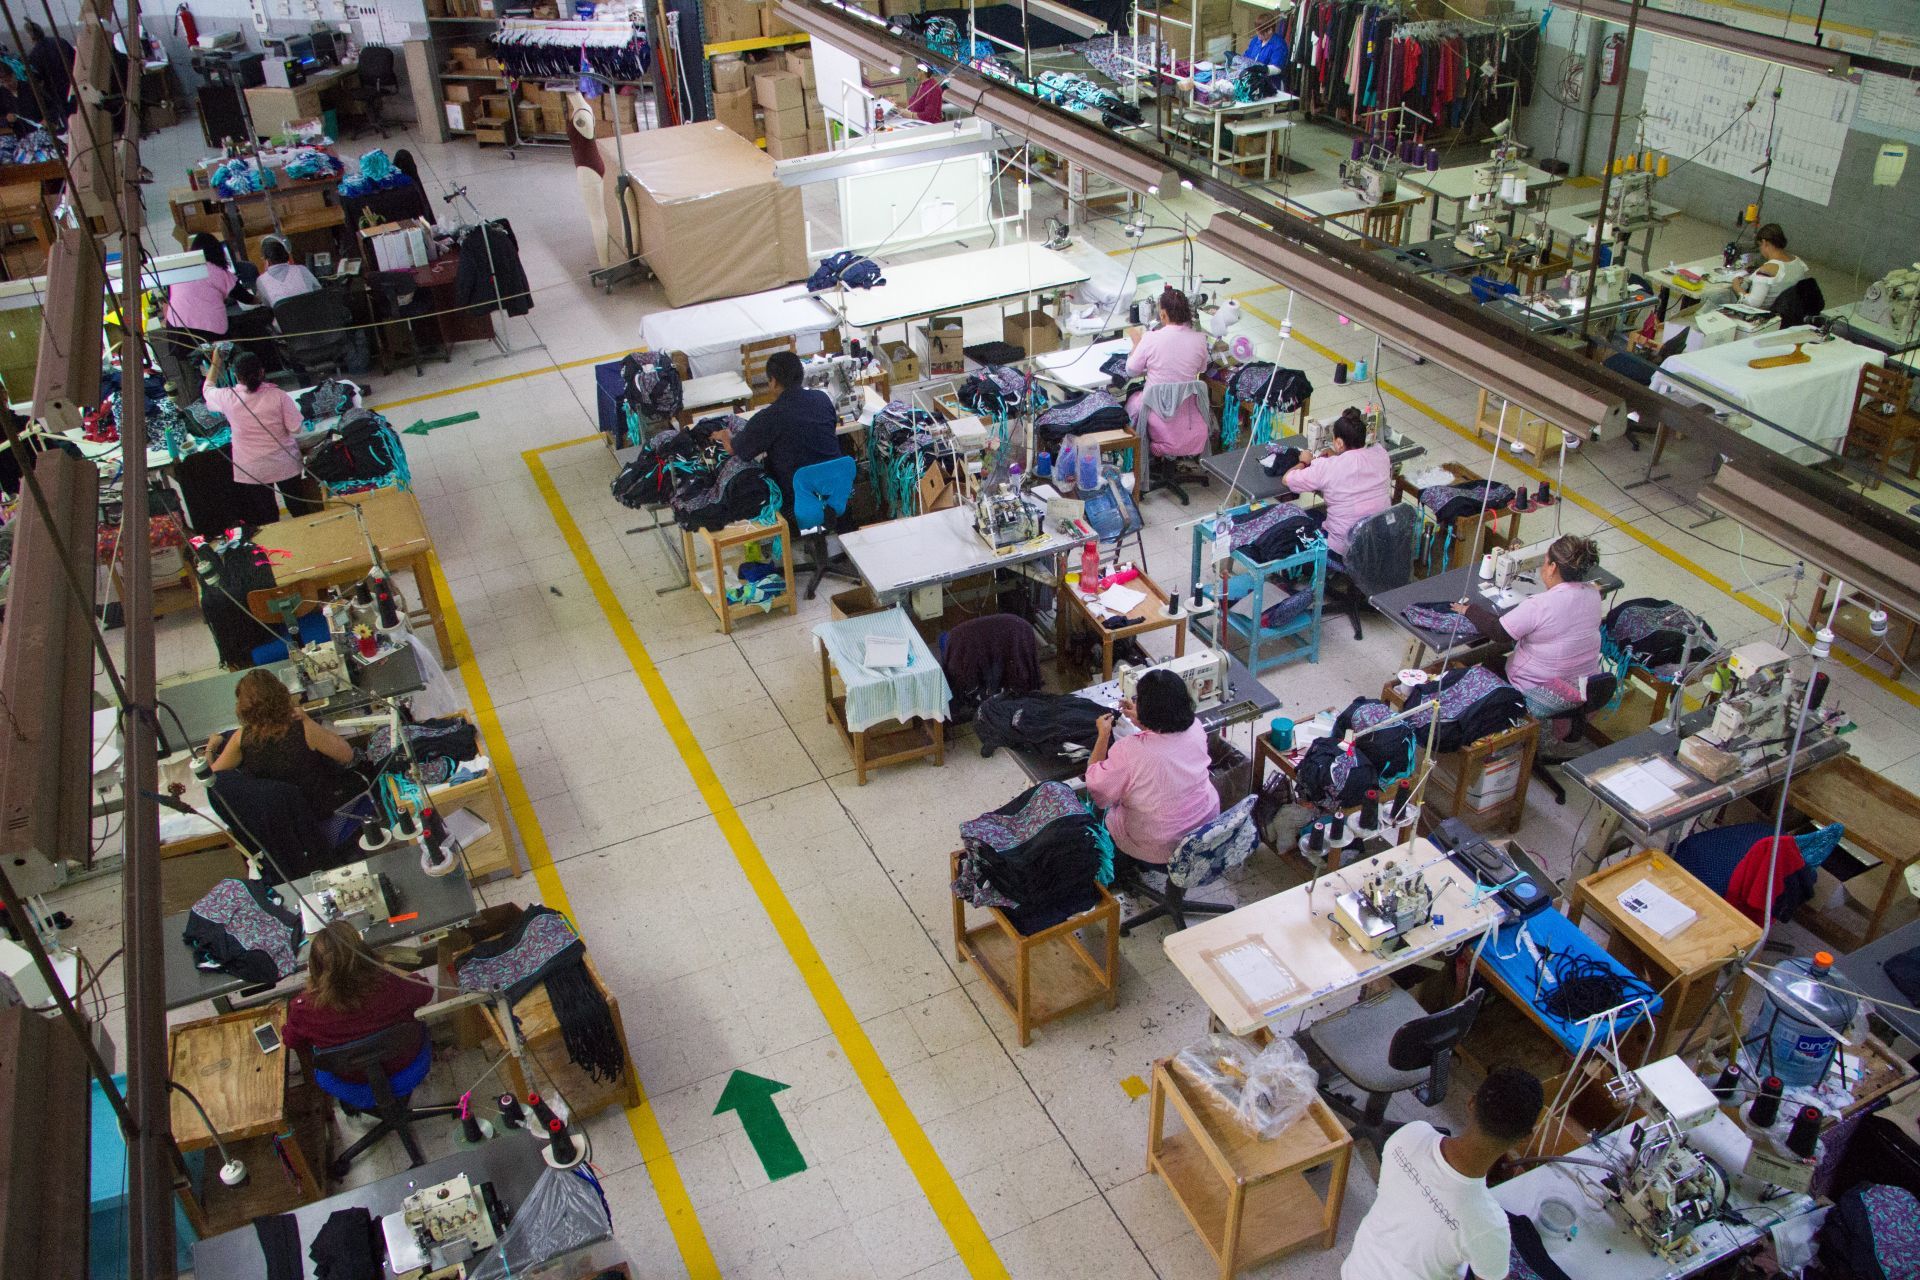 EU pide a México revisar derechos laborales en fábrica de Aguascalientes